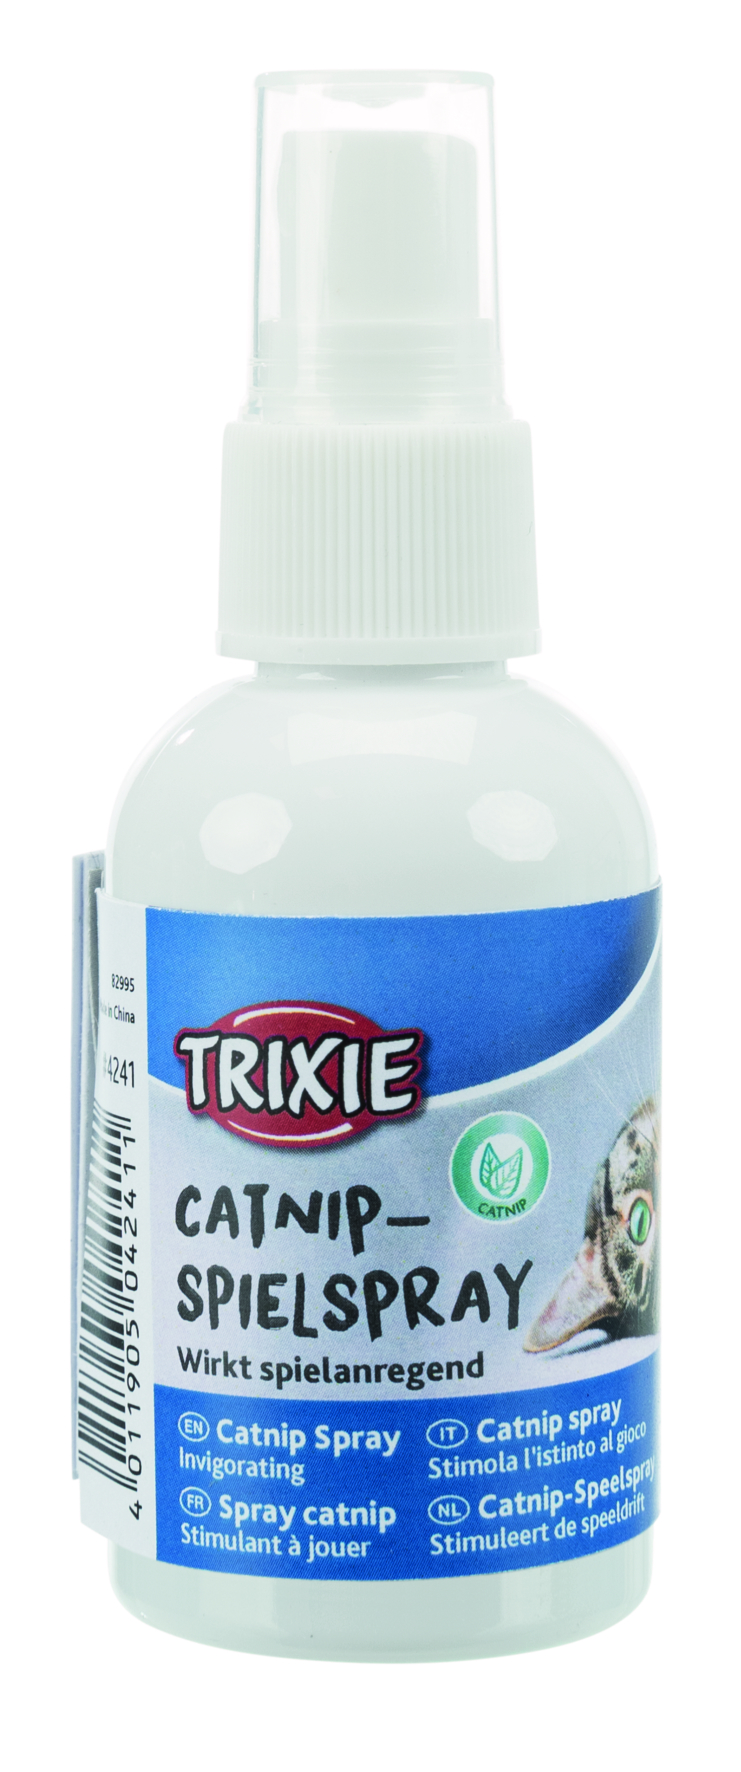 Catnip -Spielspray, 50 ml